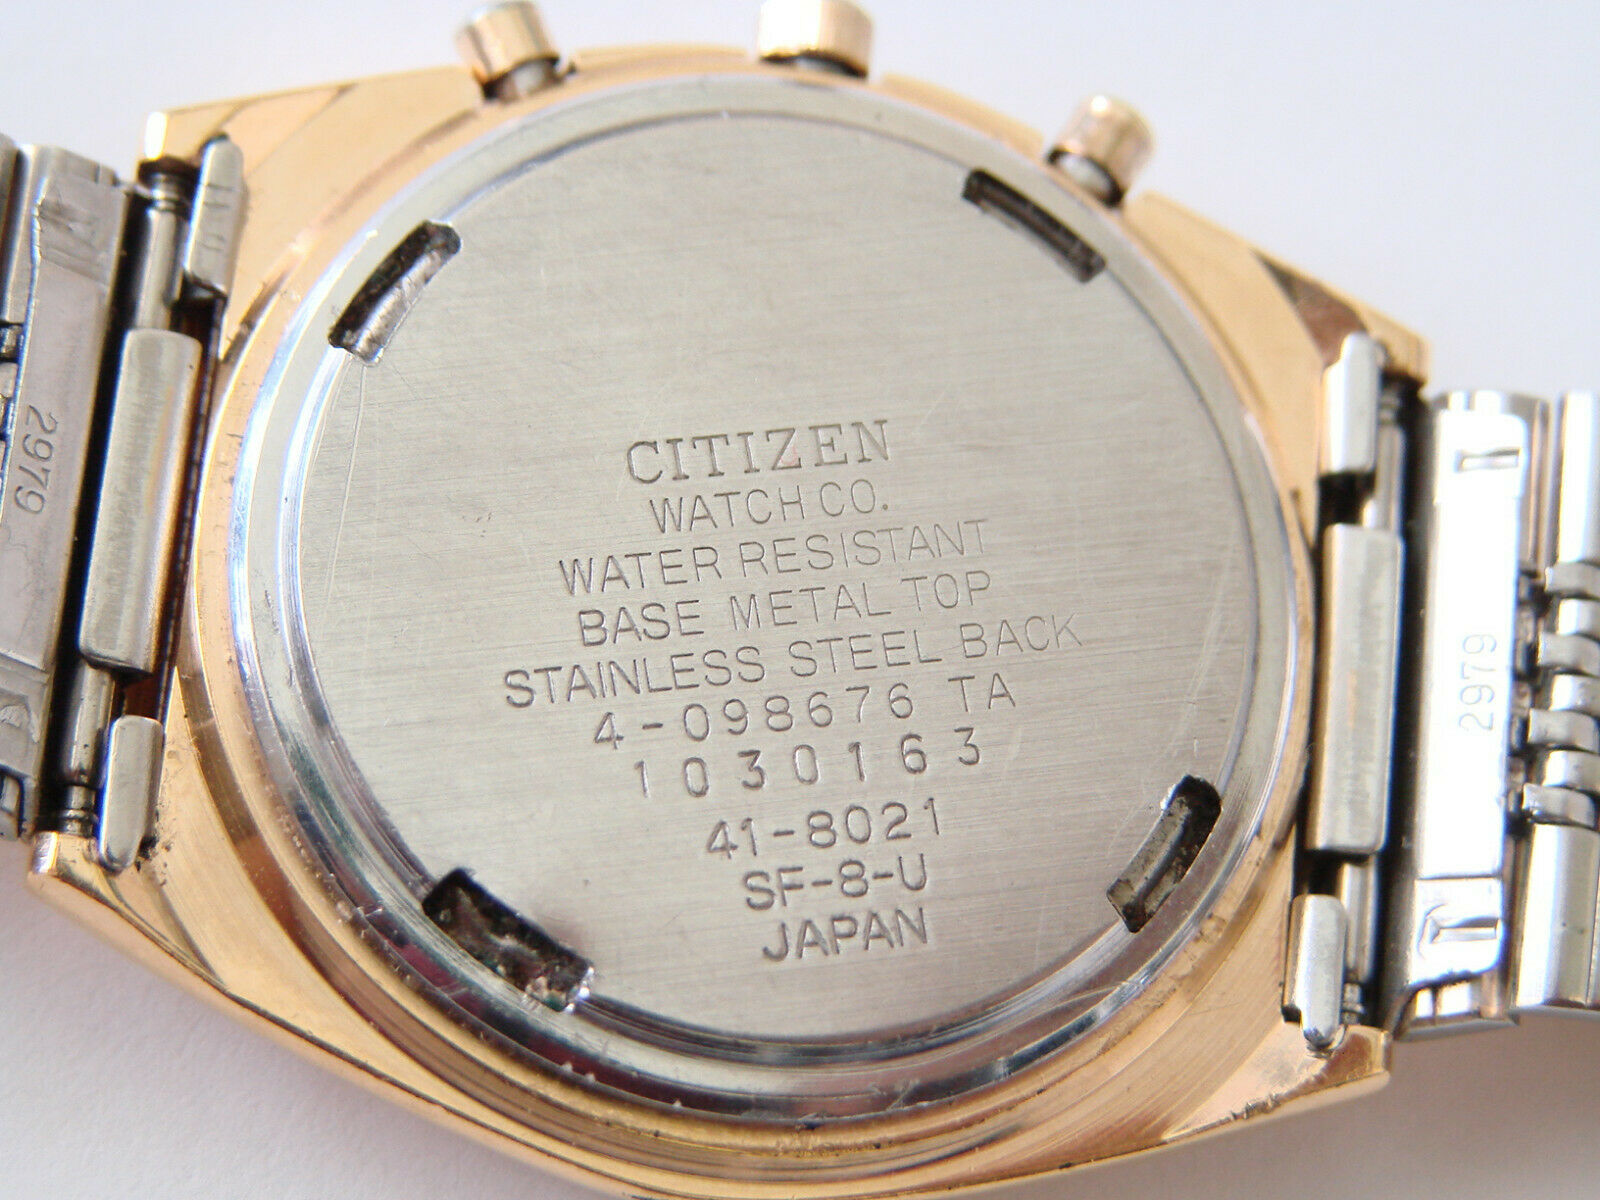 Citizen 4-098676 Ana-Digi Alarm Chrono watch caliber 8920 Japan